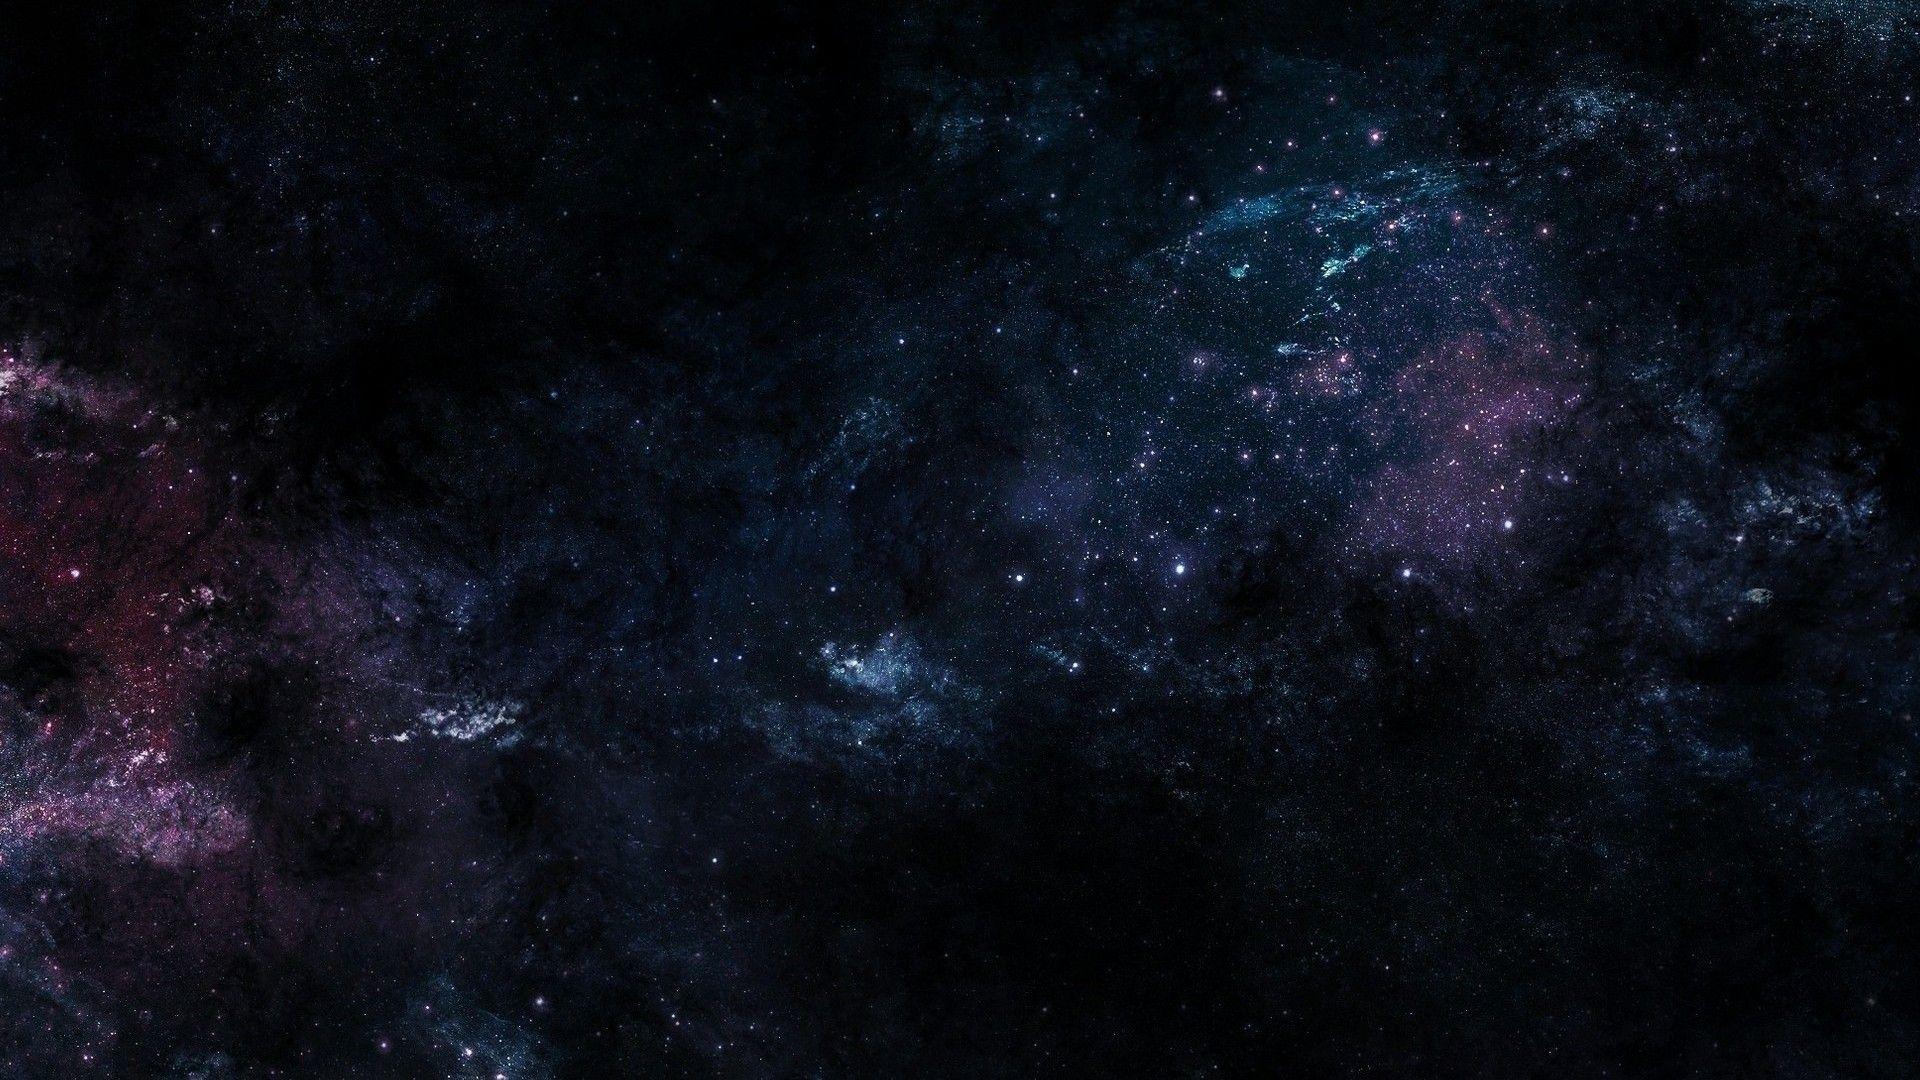 Download 1080p Stars Wallpaper Hd Backgrounds Download - galaxy 1080p desktop background milky way night sky wallpaper hd